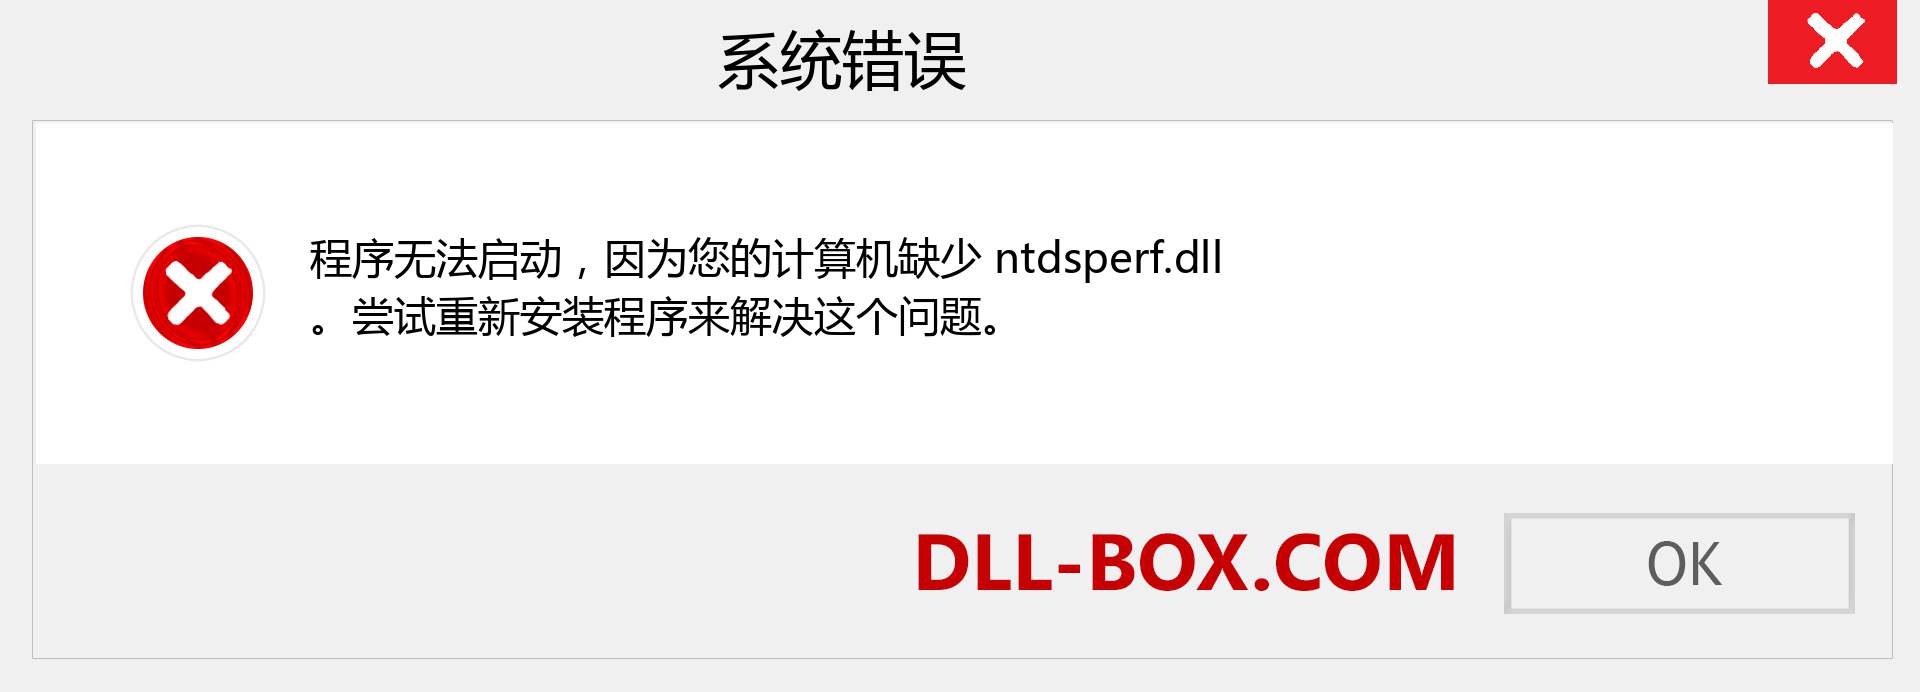 ntdsperf.dll 文件丢失？。 适用于 Windows 7、8、10 的下载 - 修复 Windows、照片、图像上的 ntdsperf dll 丢失错误